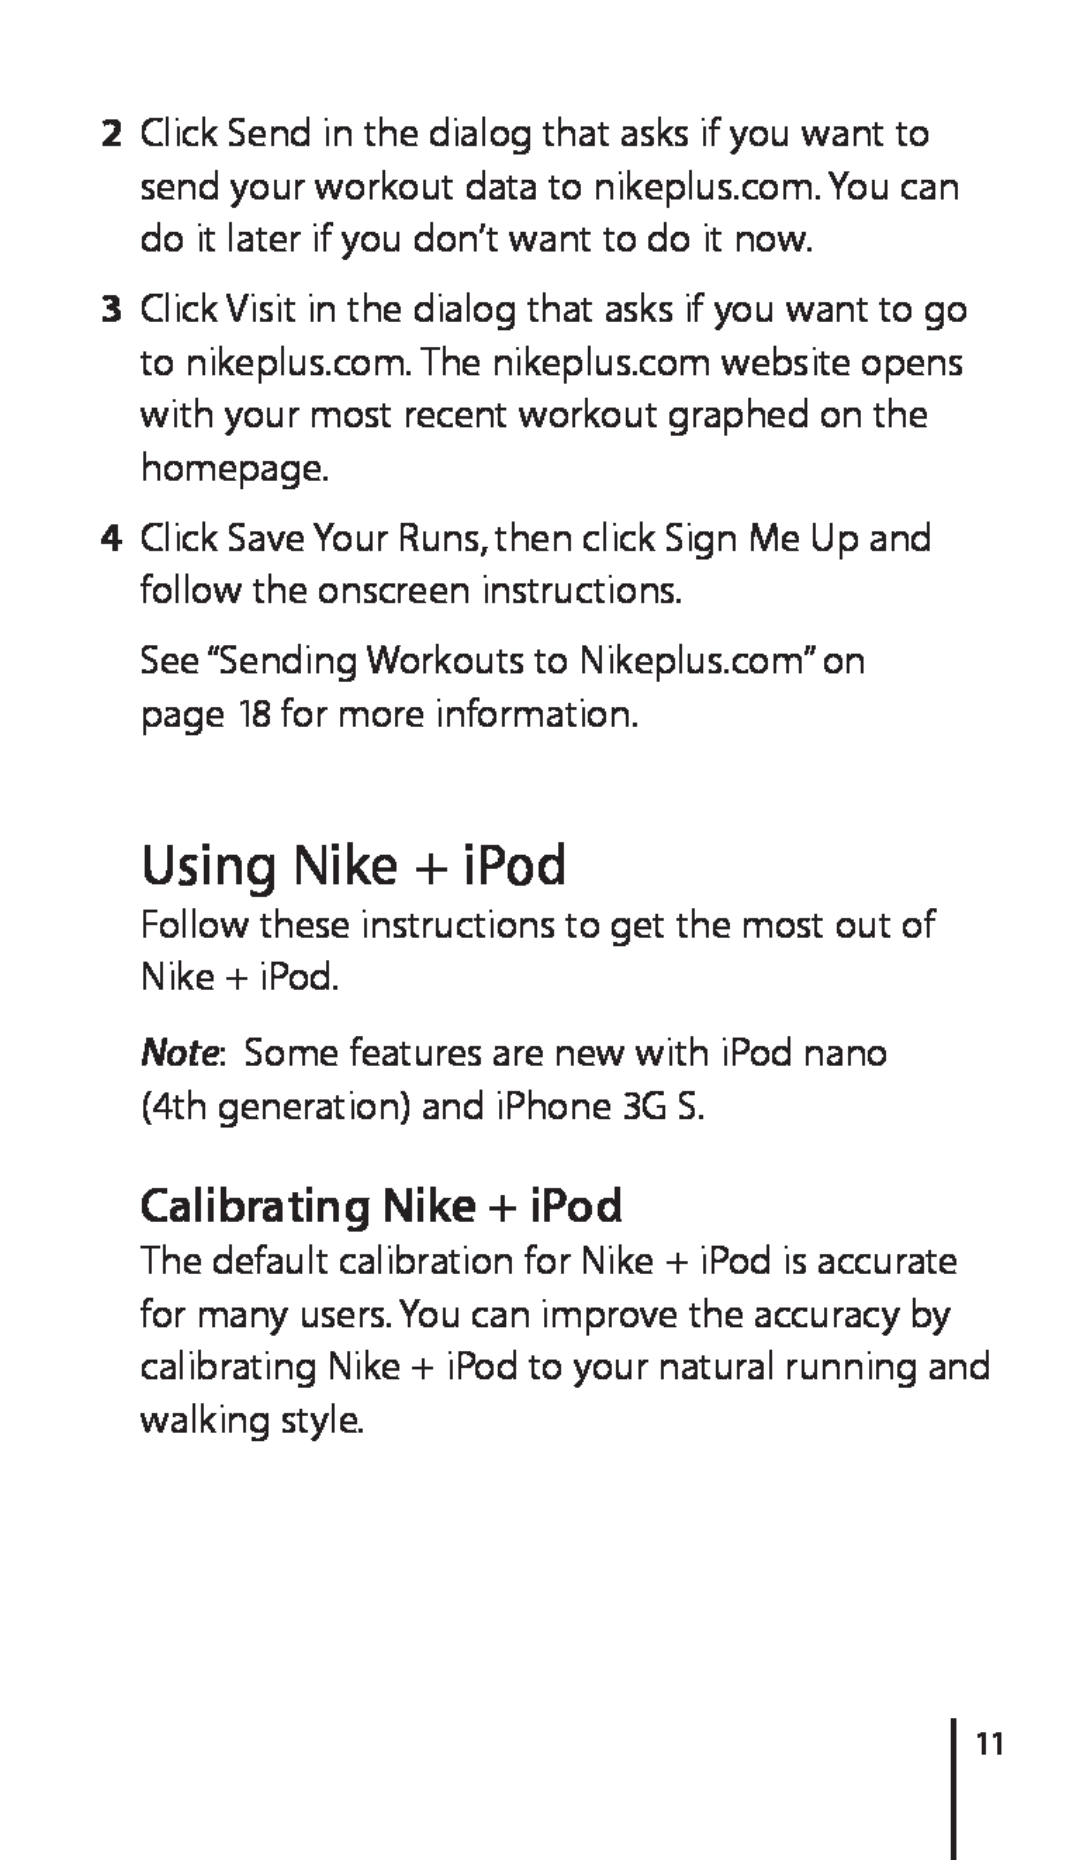 Apple 034-4945-A, Nike + iPod Sensor manual Using Nike + iPod, Calibrating Nike + iPod 